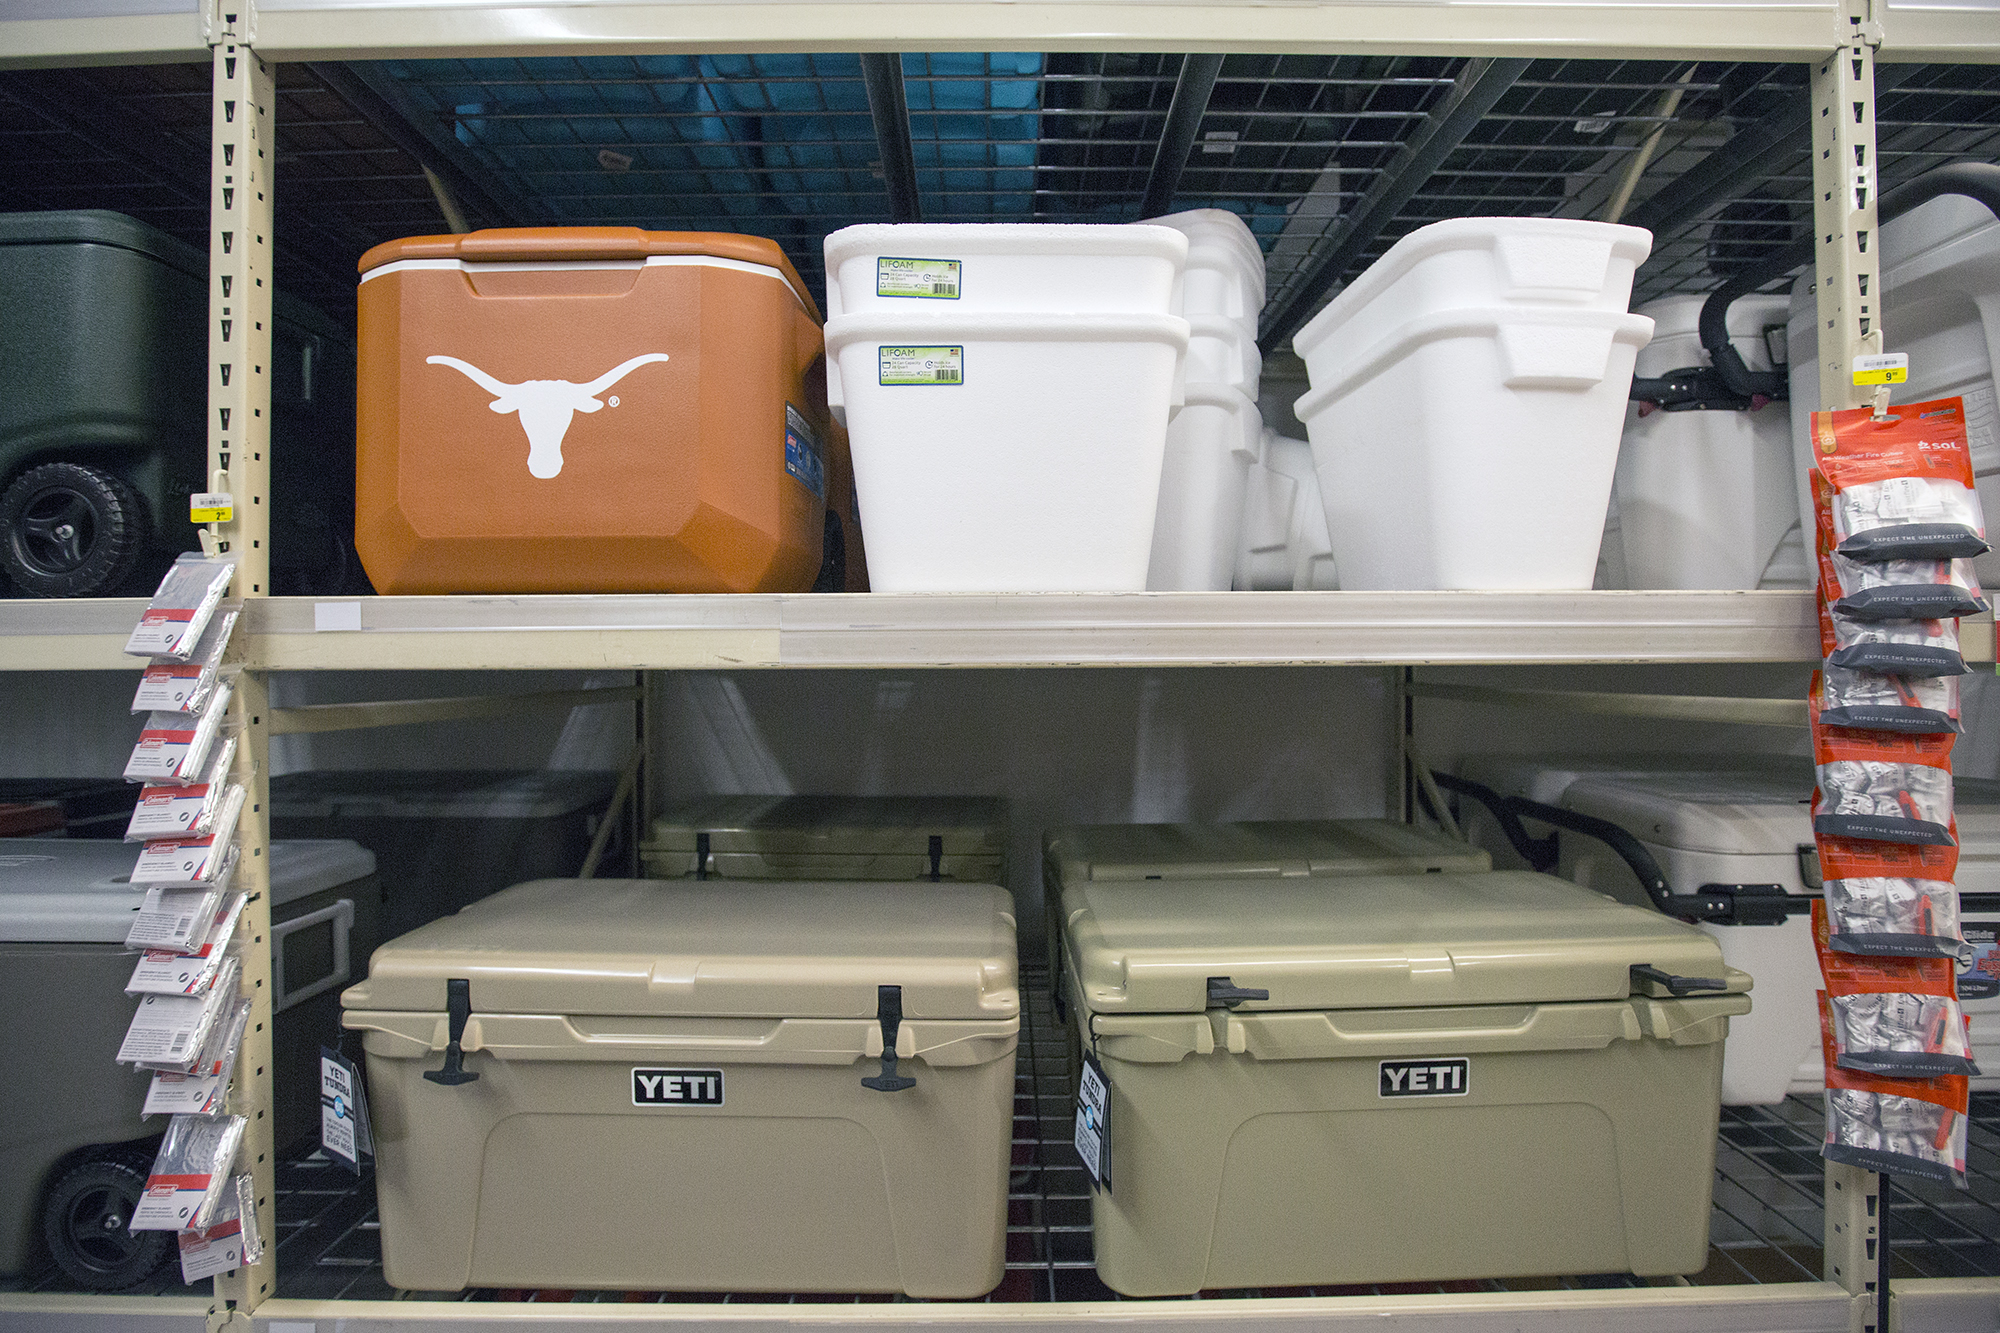 Licensed Texas Tech University YETI Coolers